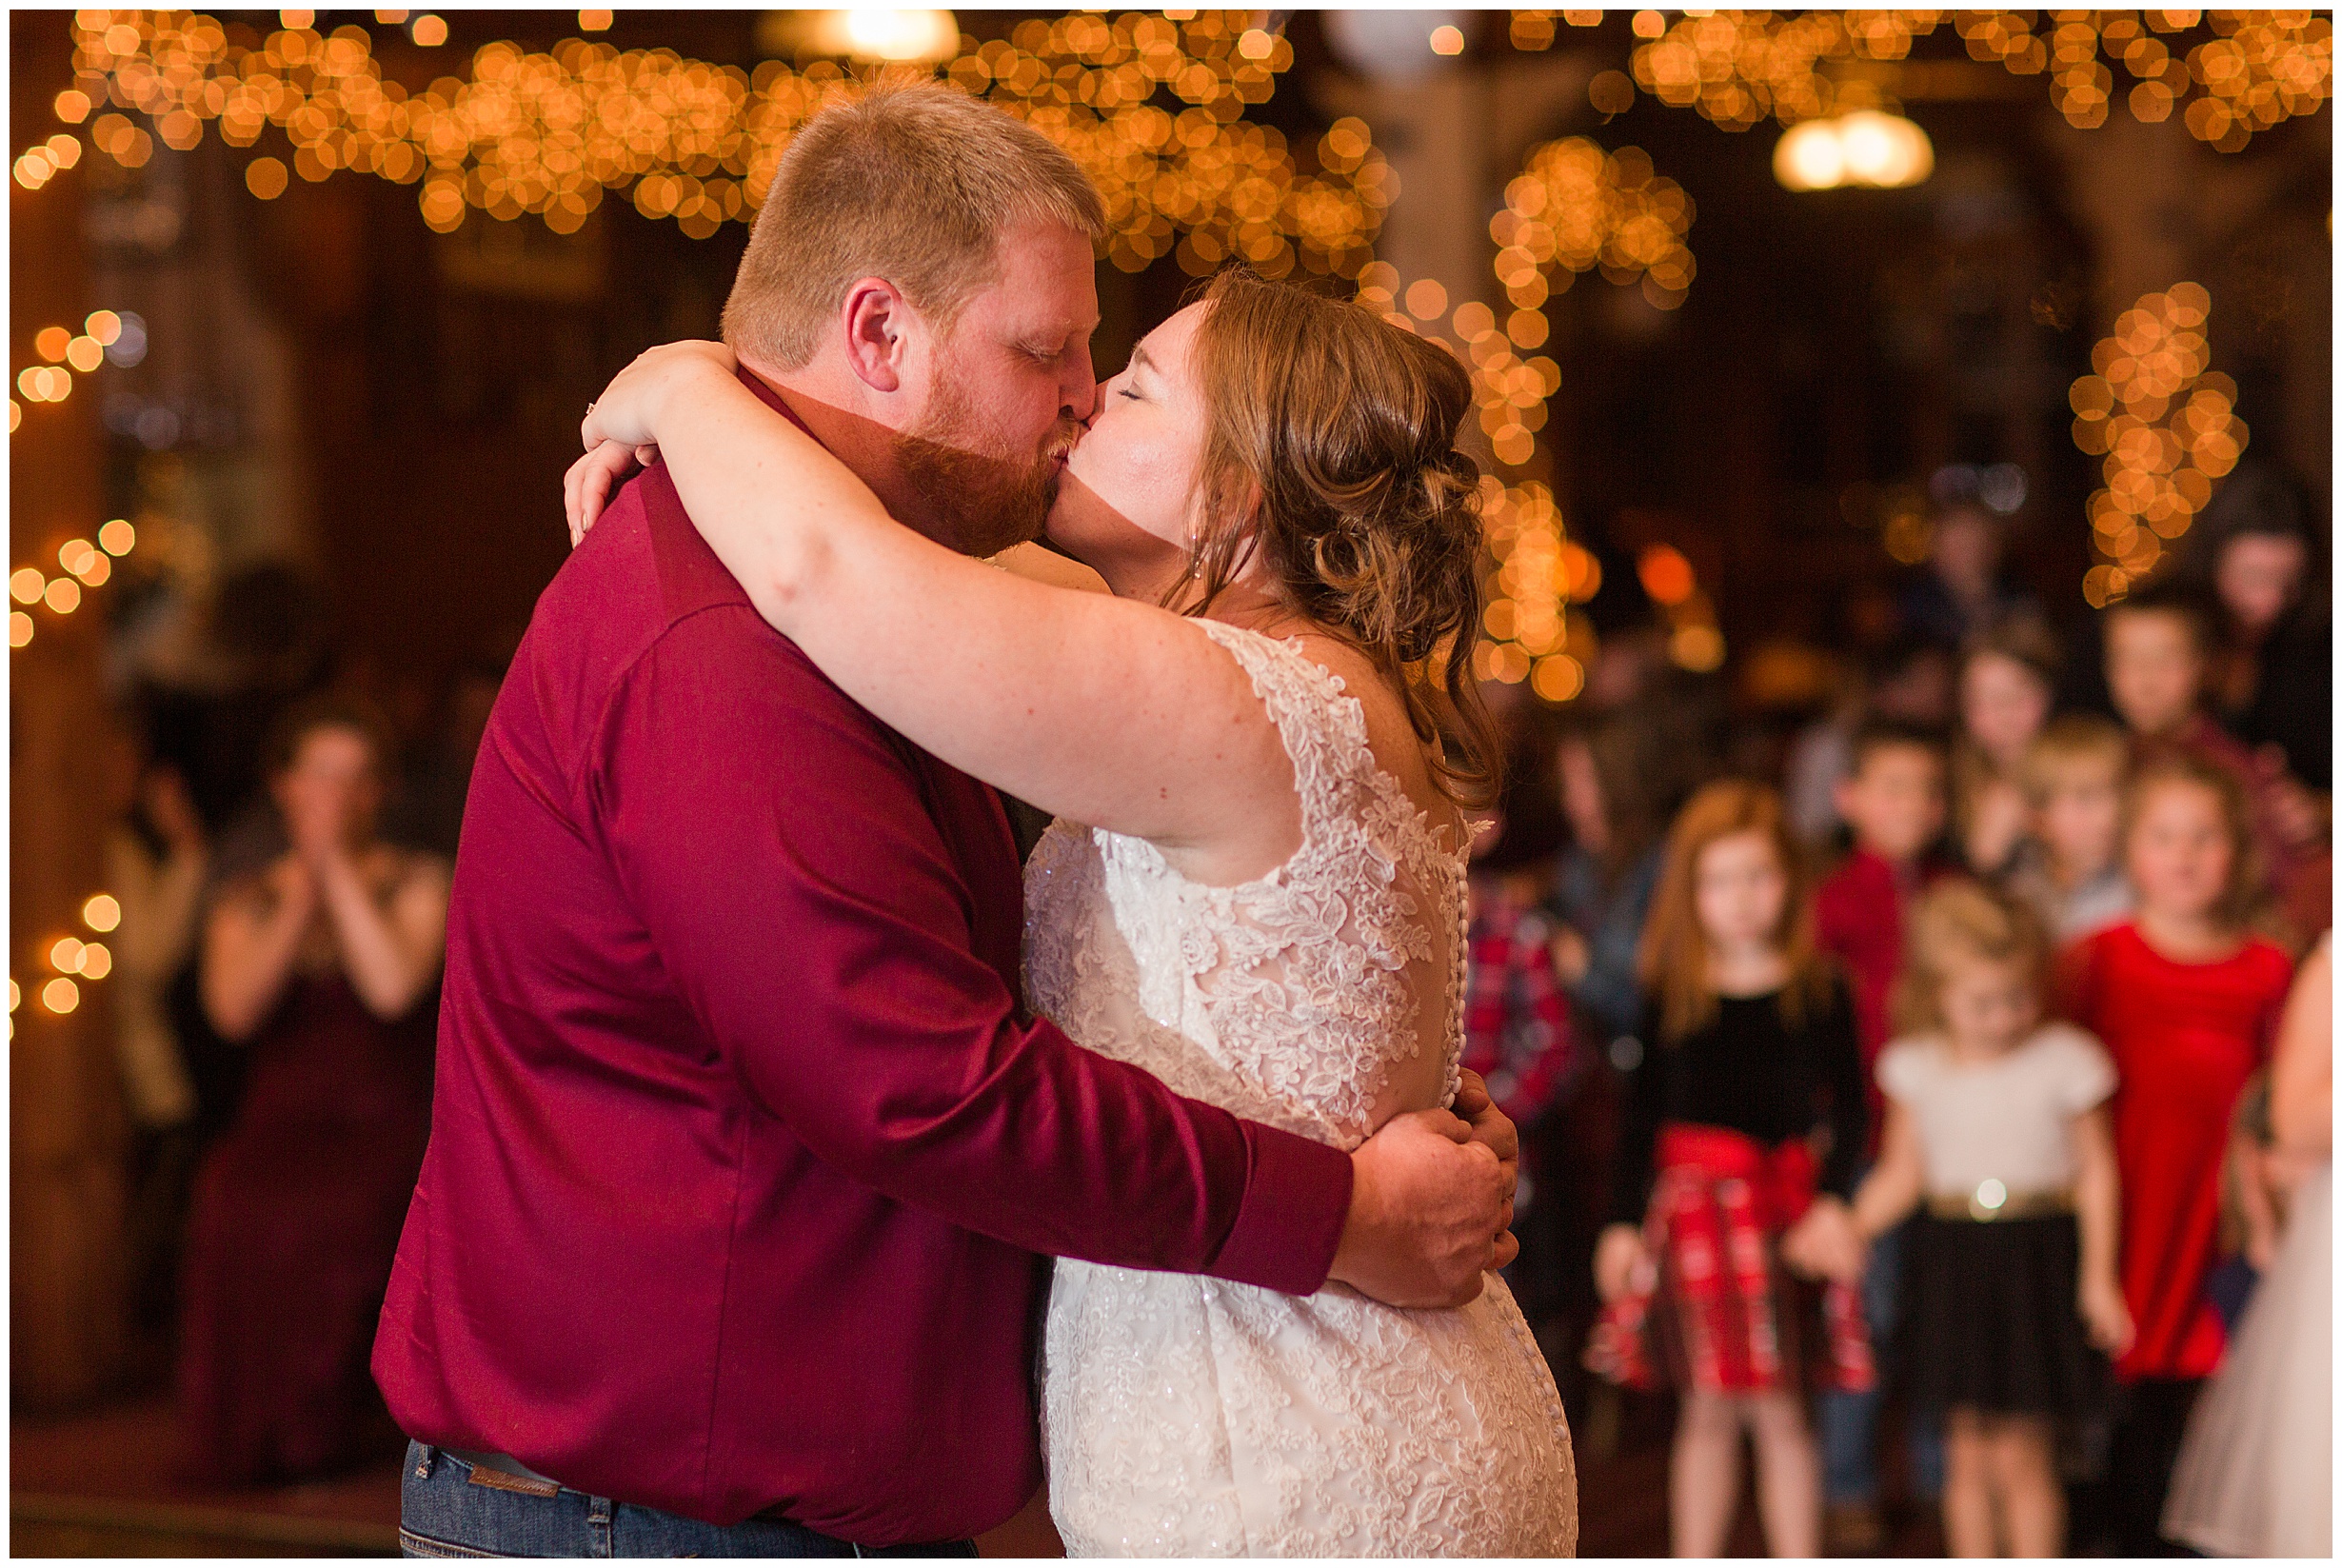 Iowa City Photographers - Iowa Winter Wedding -Megan Snitker Photography_0063.jpg